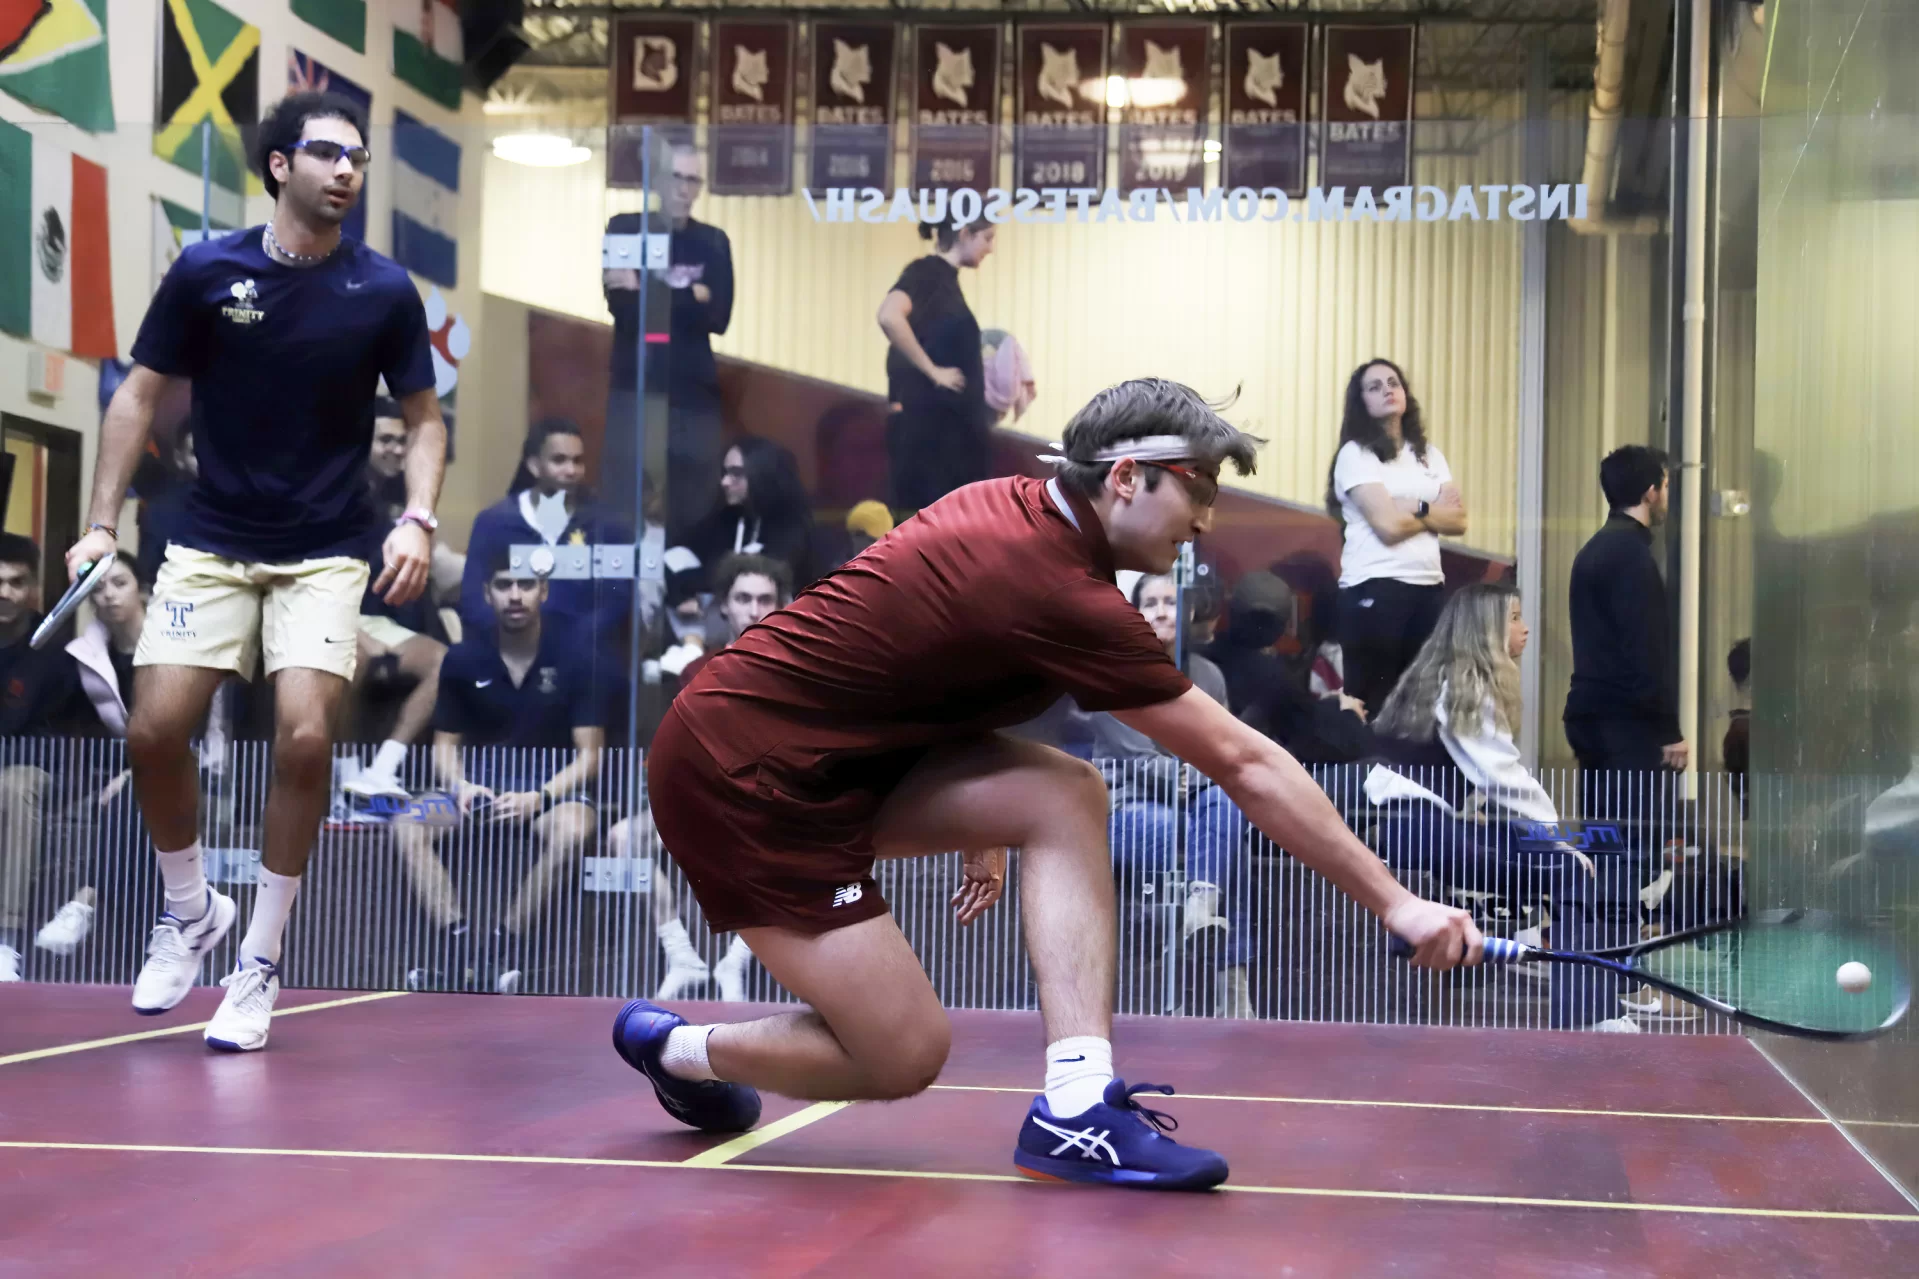 Bates men's squash played Trinity on Dec. 2.